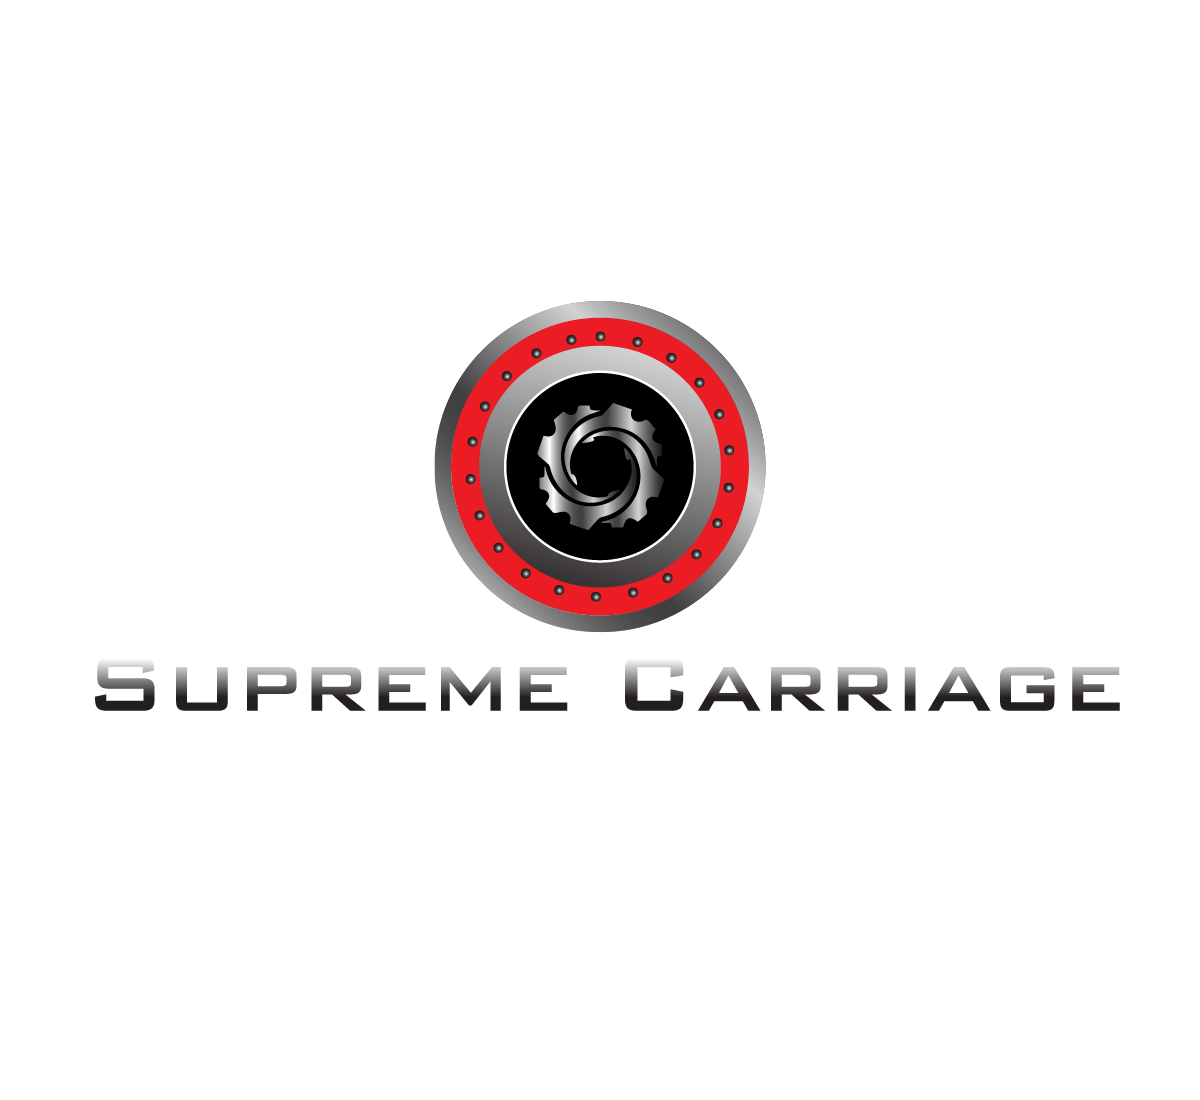 Supreme Automotive Logo - Serious, Upmarket, Automotive Logo Design for Supreme Carriage